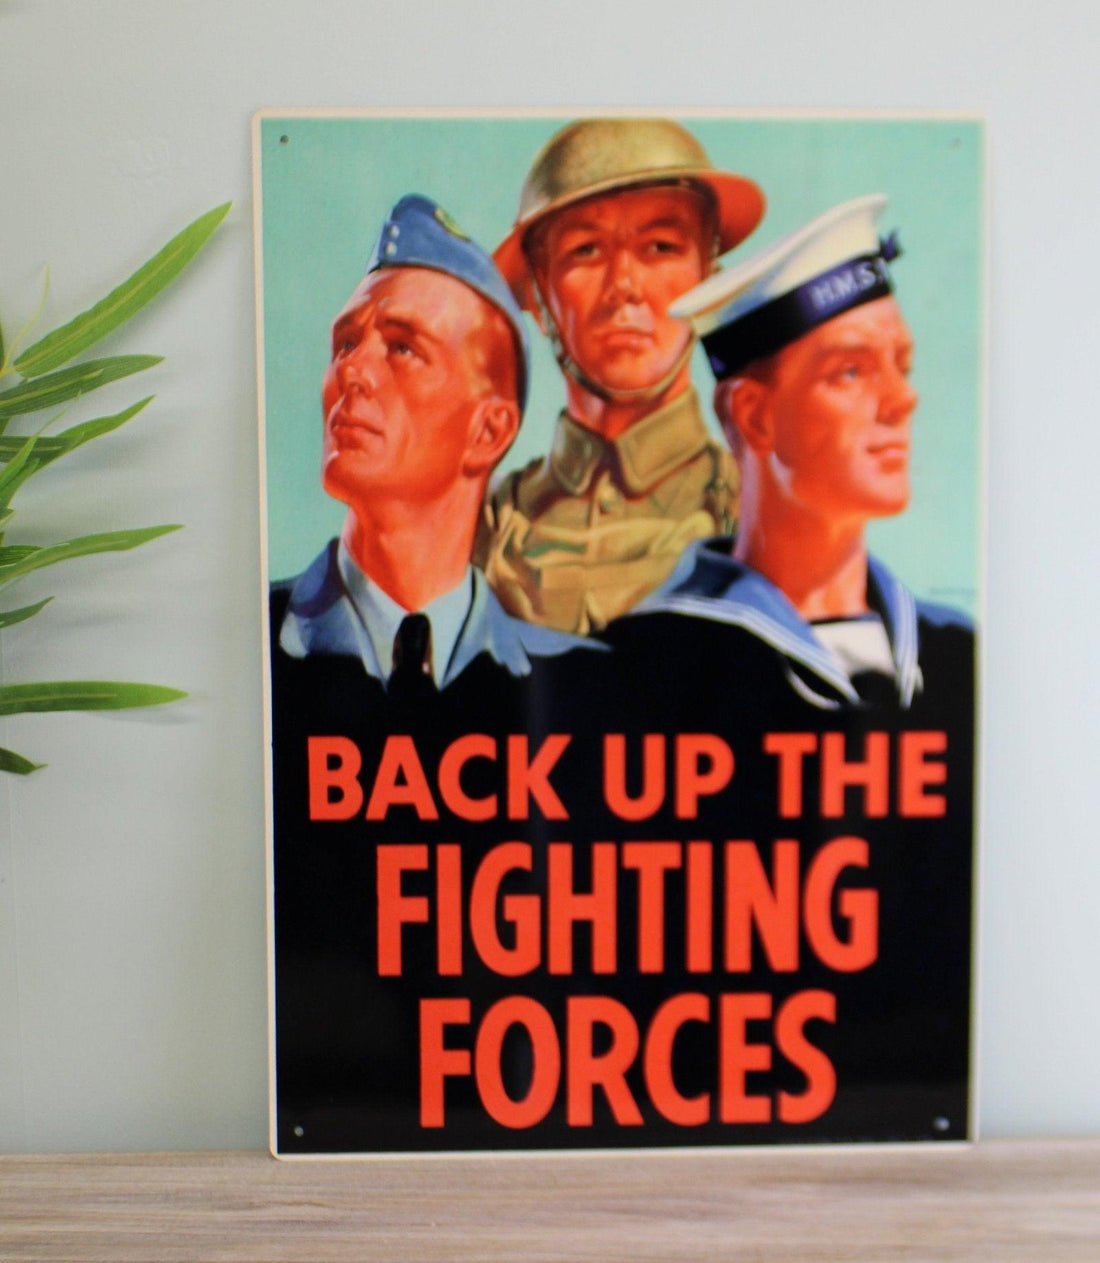 Vintage Metal Sign - Retro Propaganda - Back Up The Fighting Forces - £27.99 - Retro Propaganda 